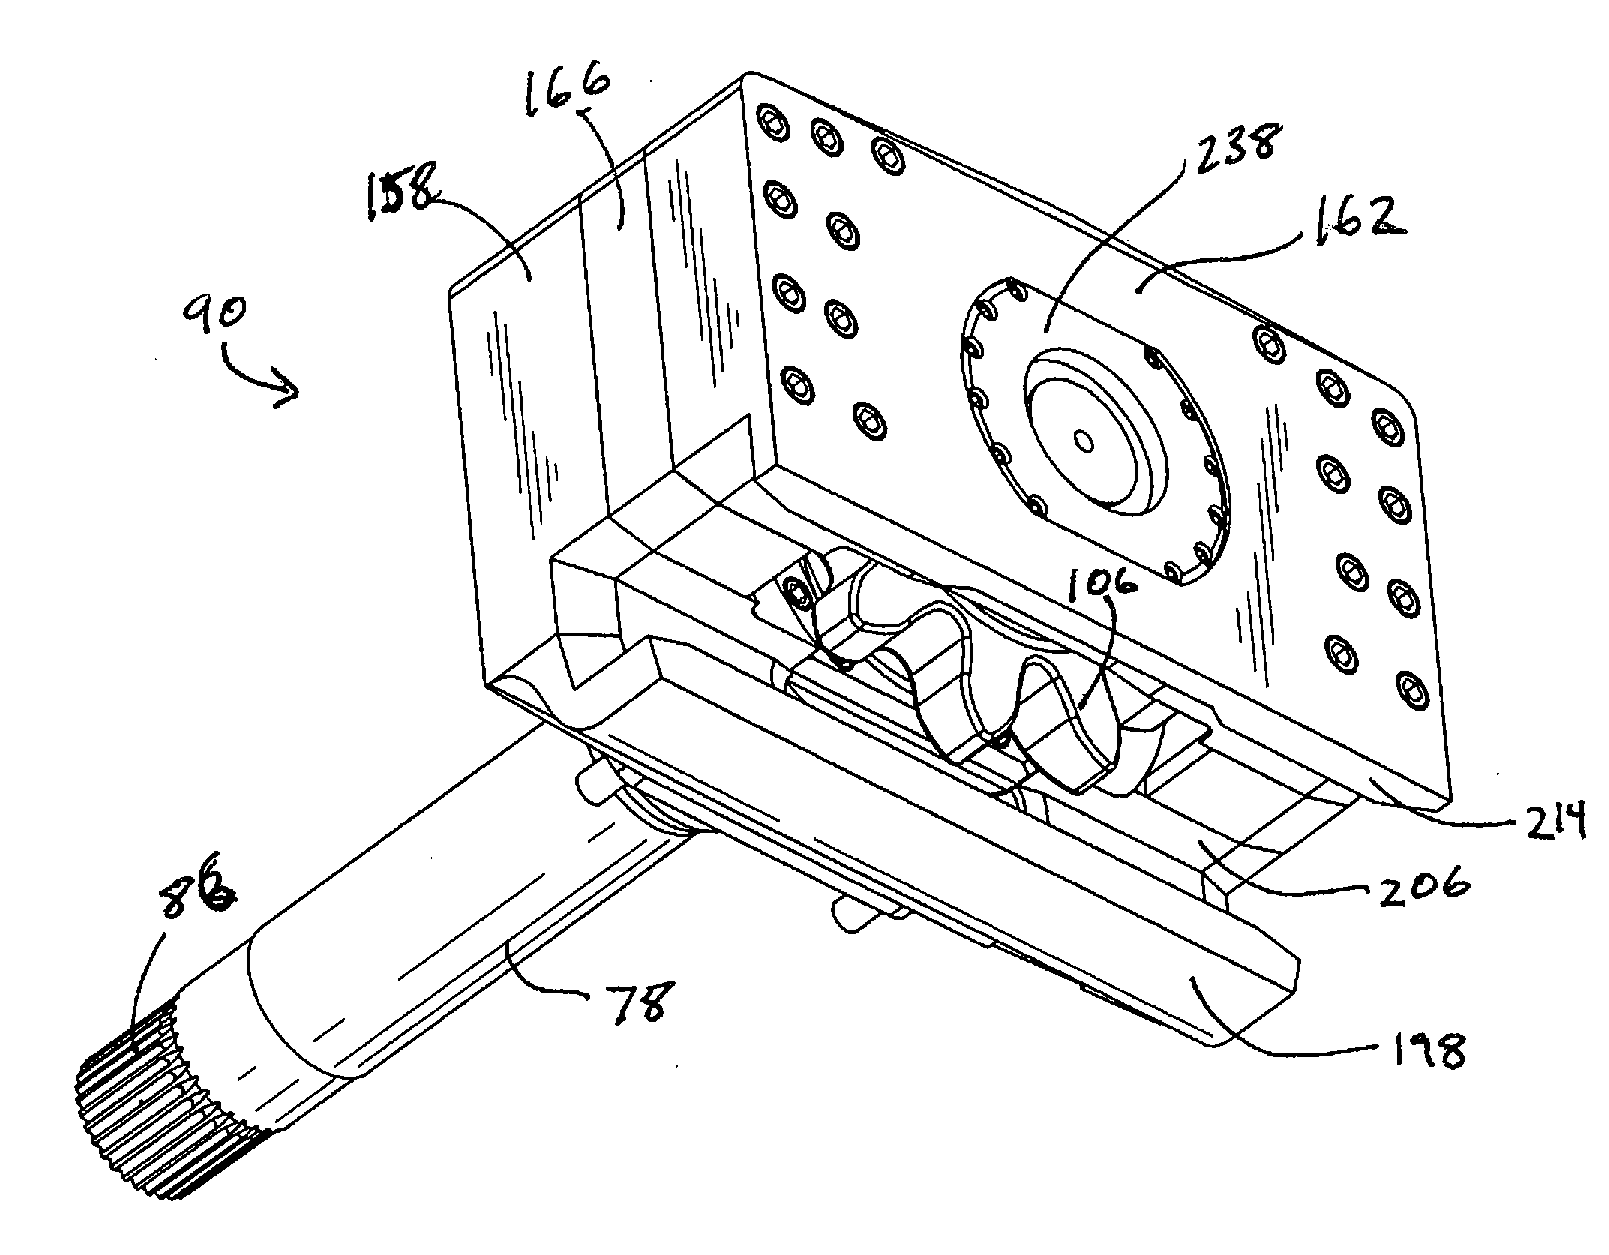 Drive mechanism for a longwall mining machine